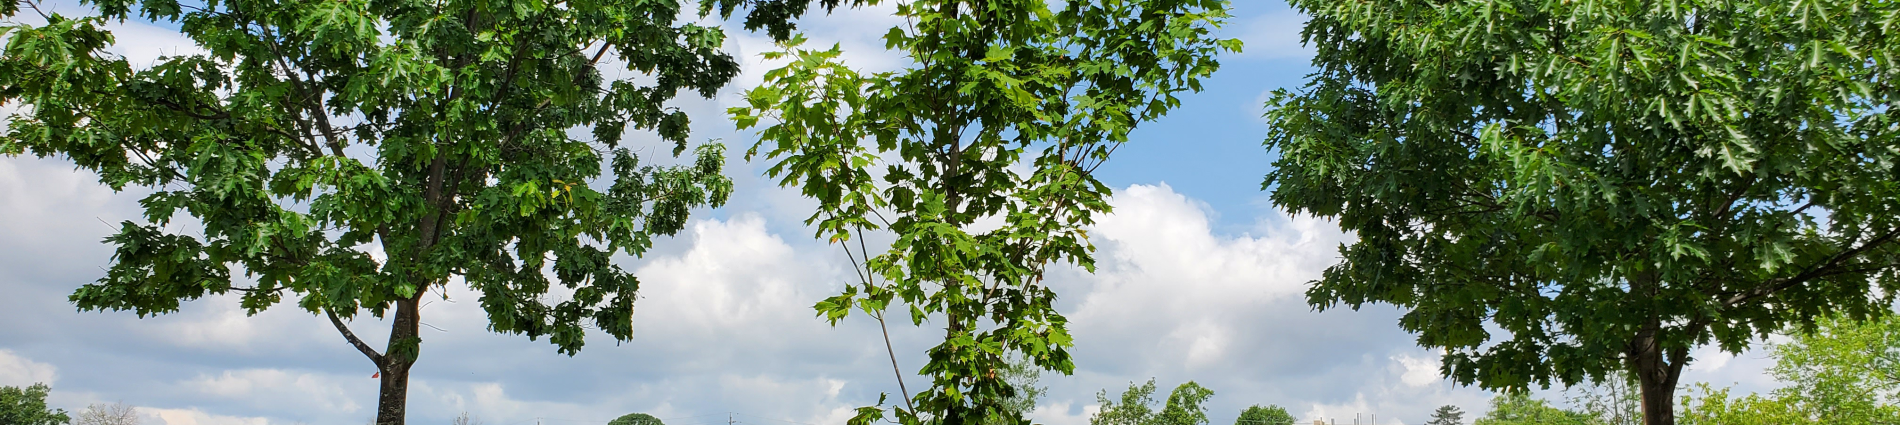 Image of treetops